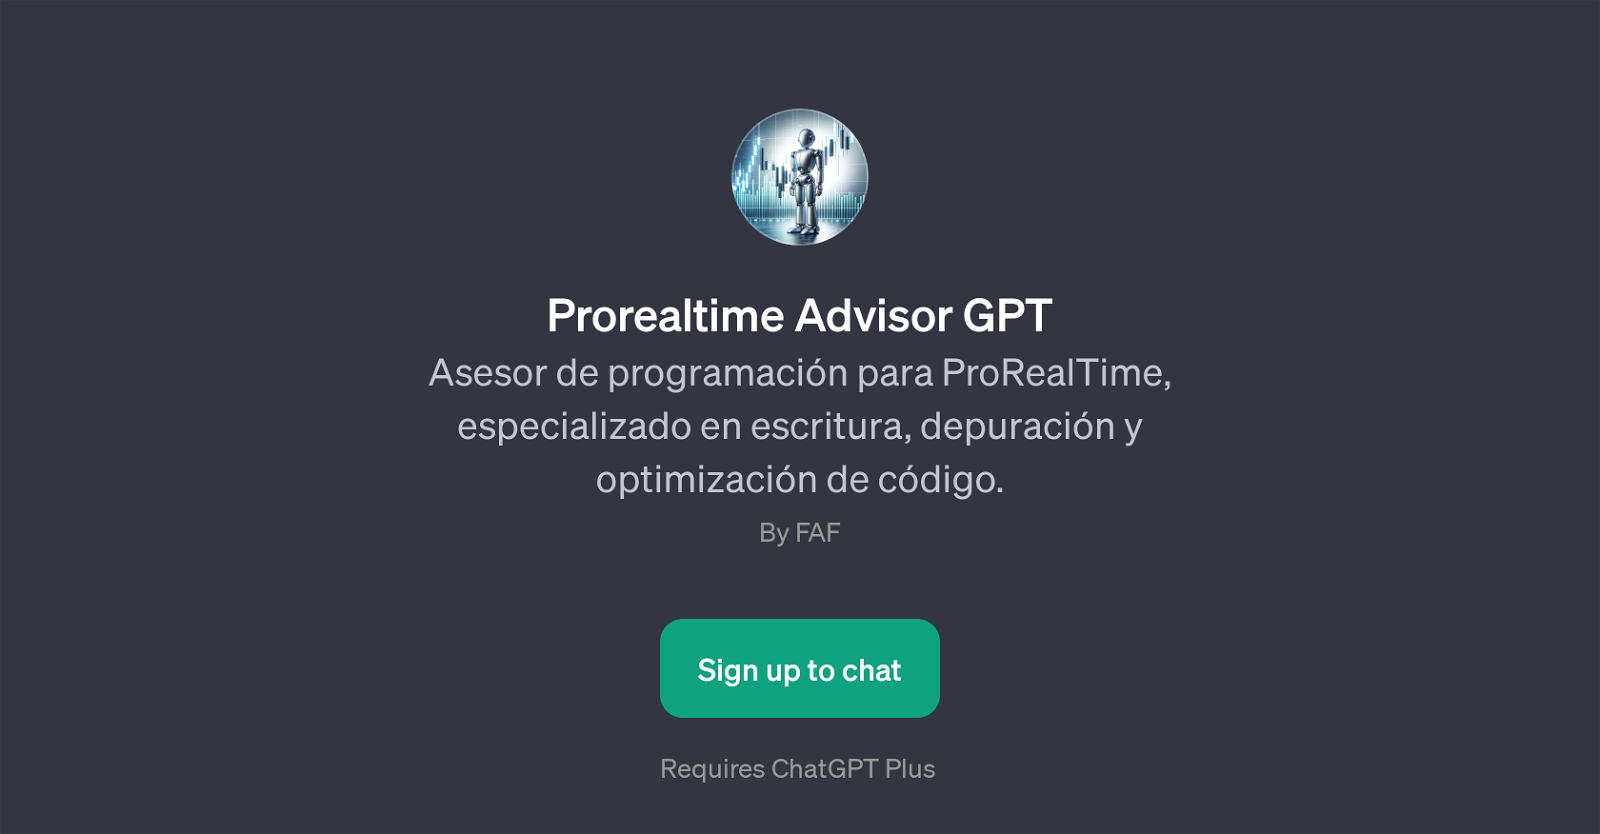 Prorealtime Advisor GPT website